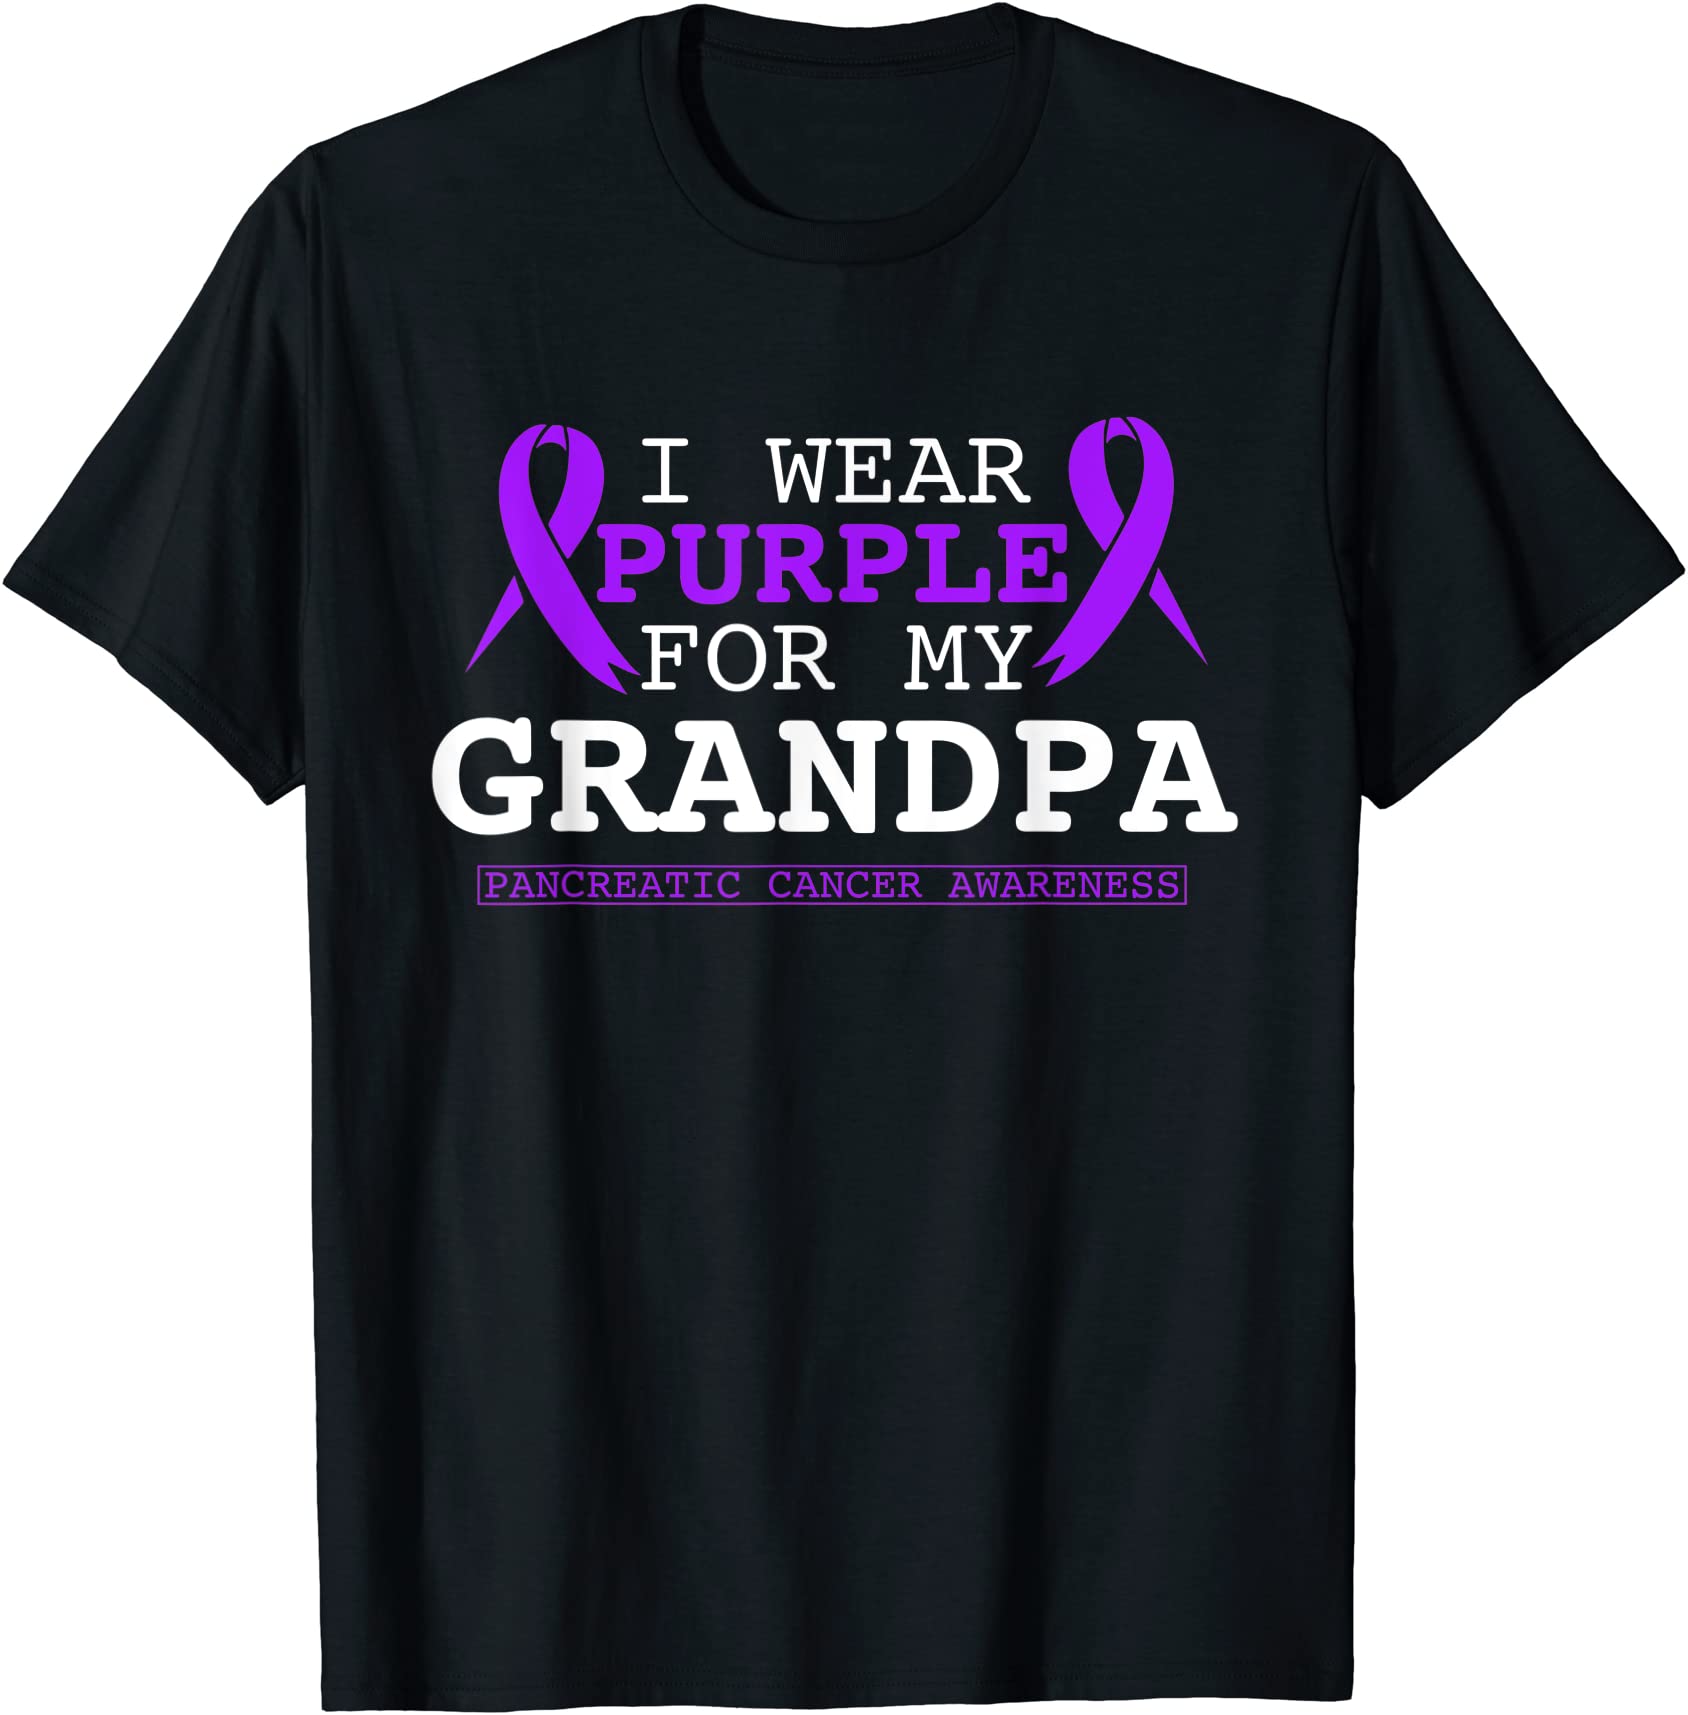 I Wear Purple For My Grandpa Tee Pancreatic Cancer Awareness T Shirt Men Buy T Shirt Designs 